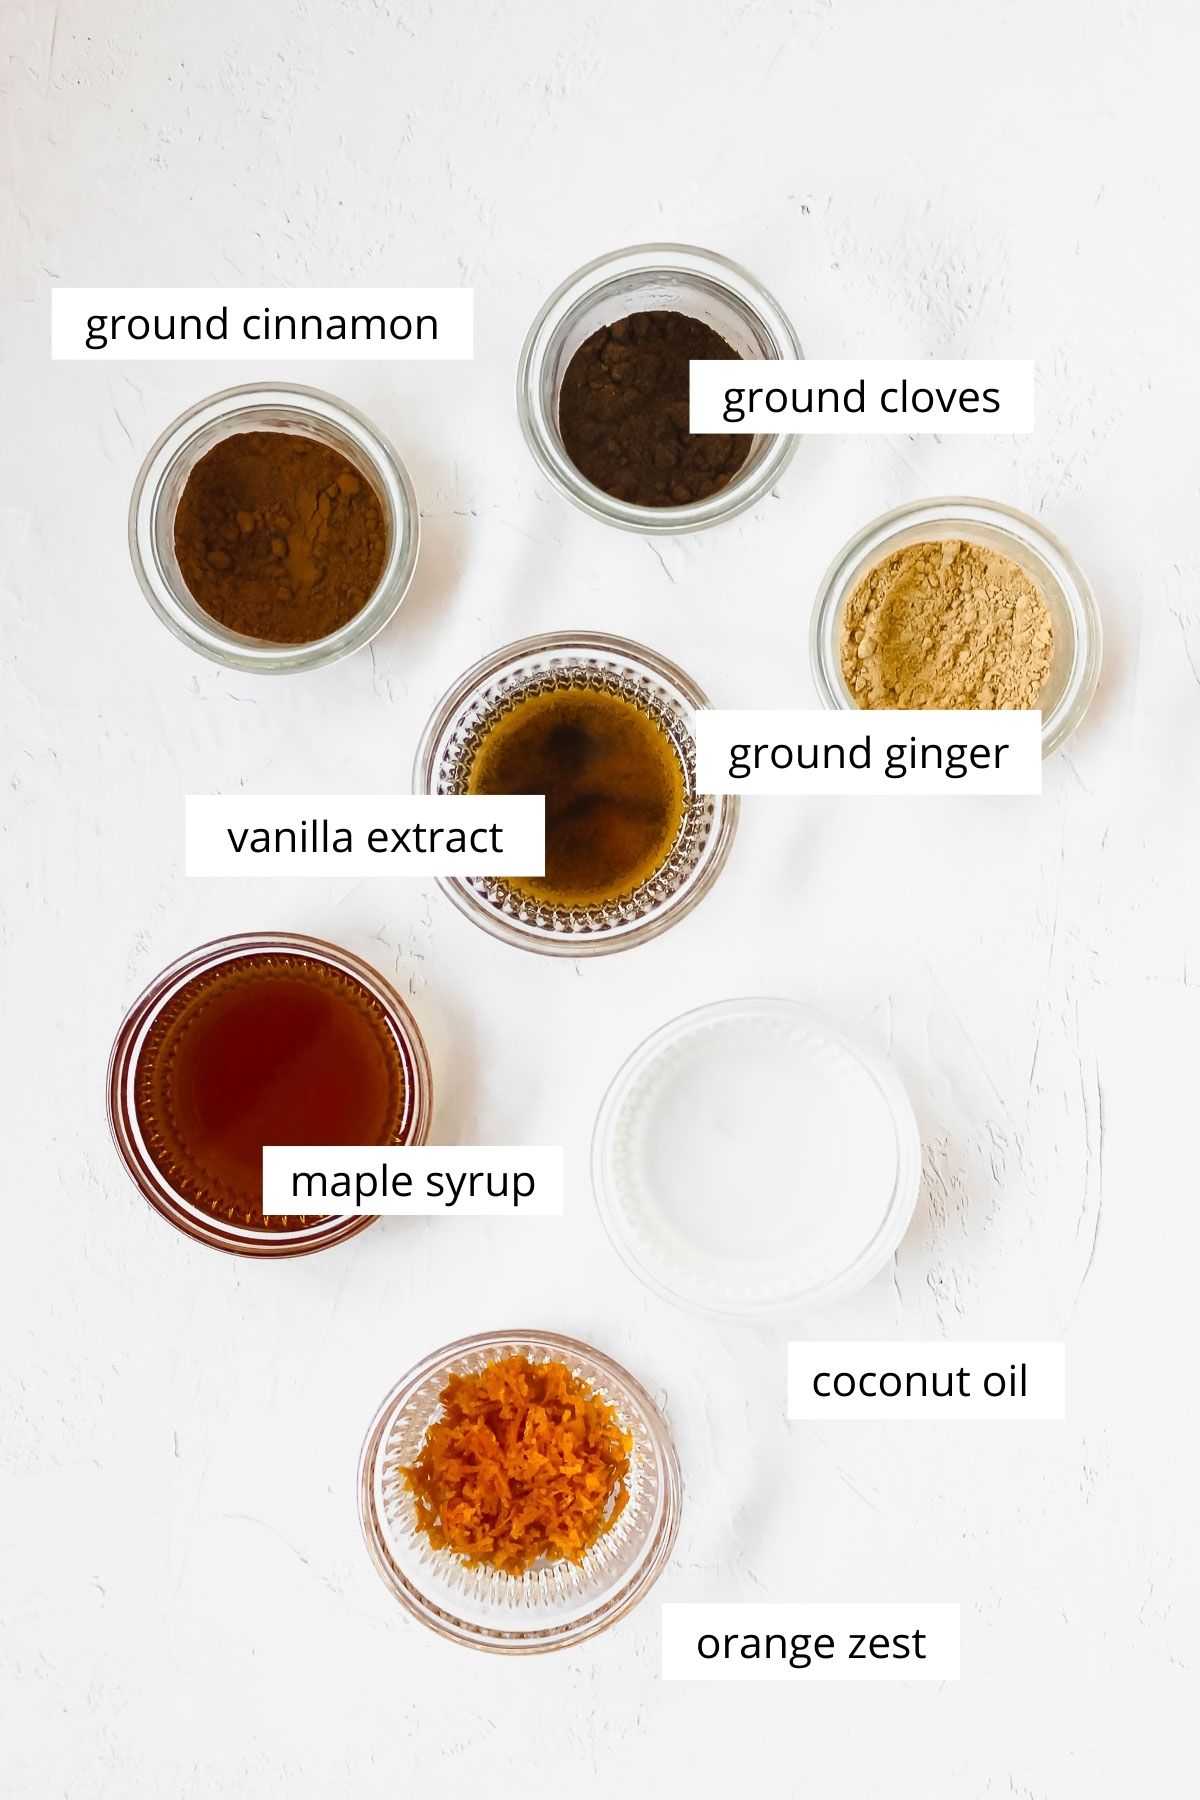 wet ingredients for gingerbread granola on light background.